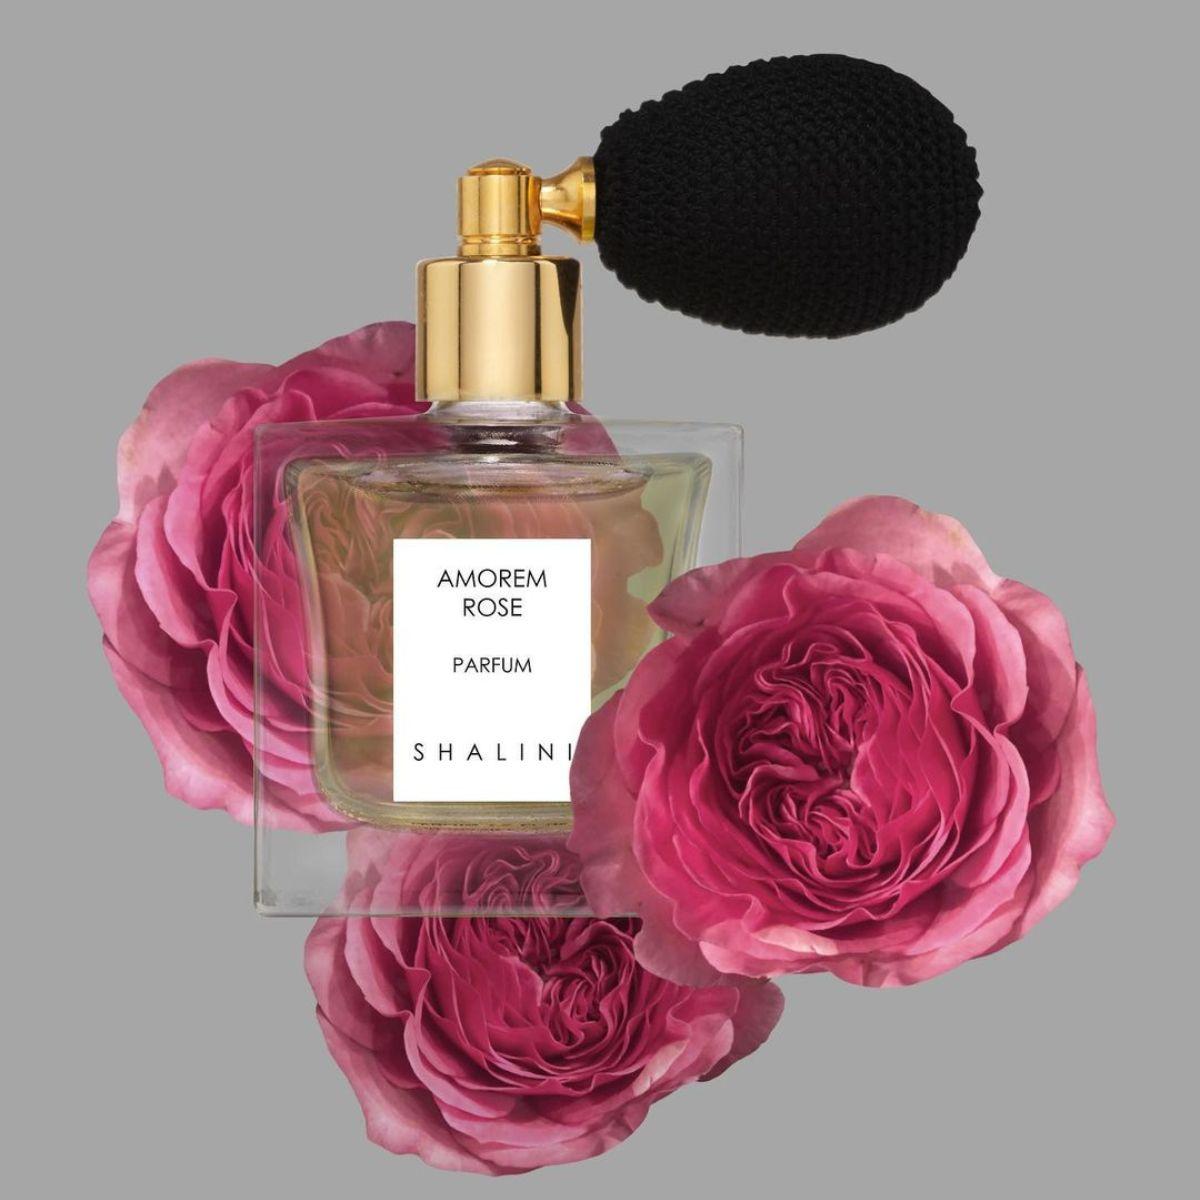 Image of Amorem Rose bulb atomizer by the perfume brand Shalini